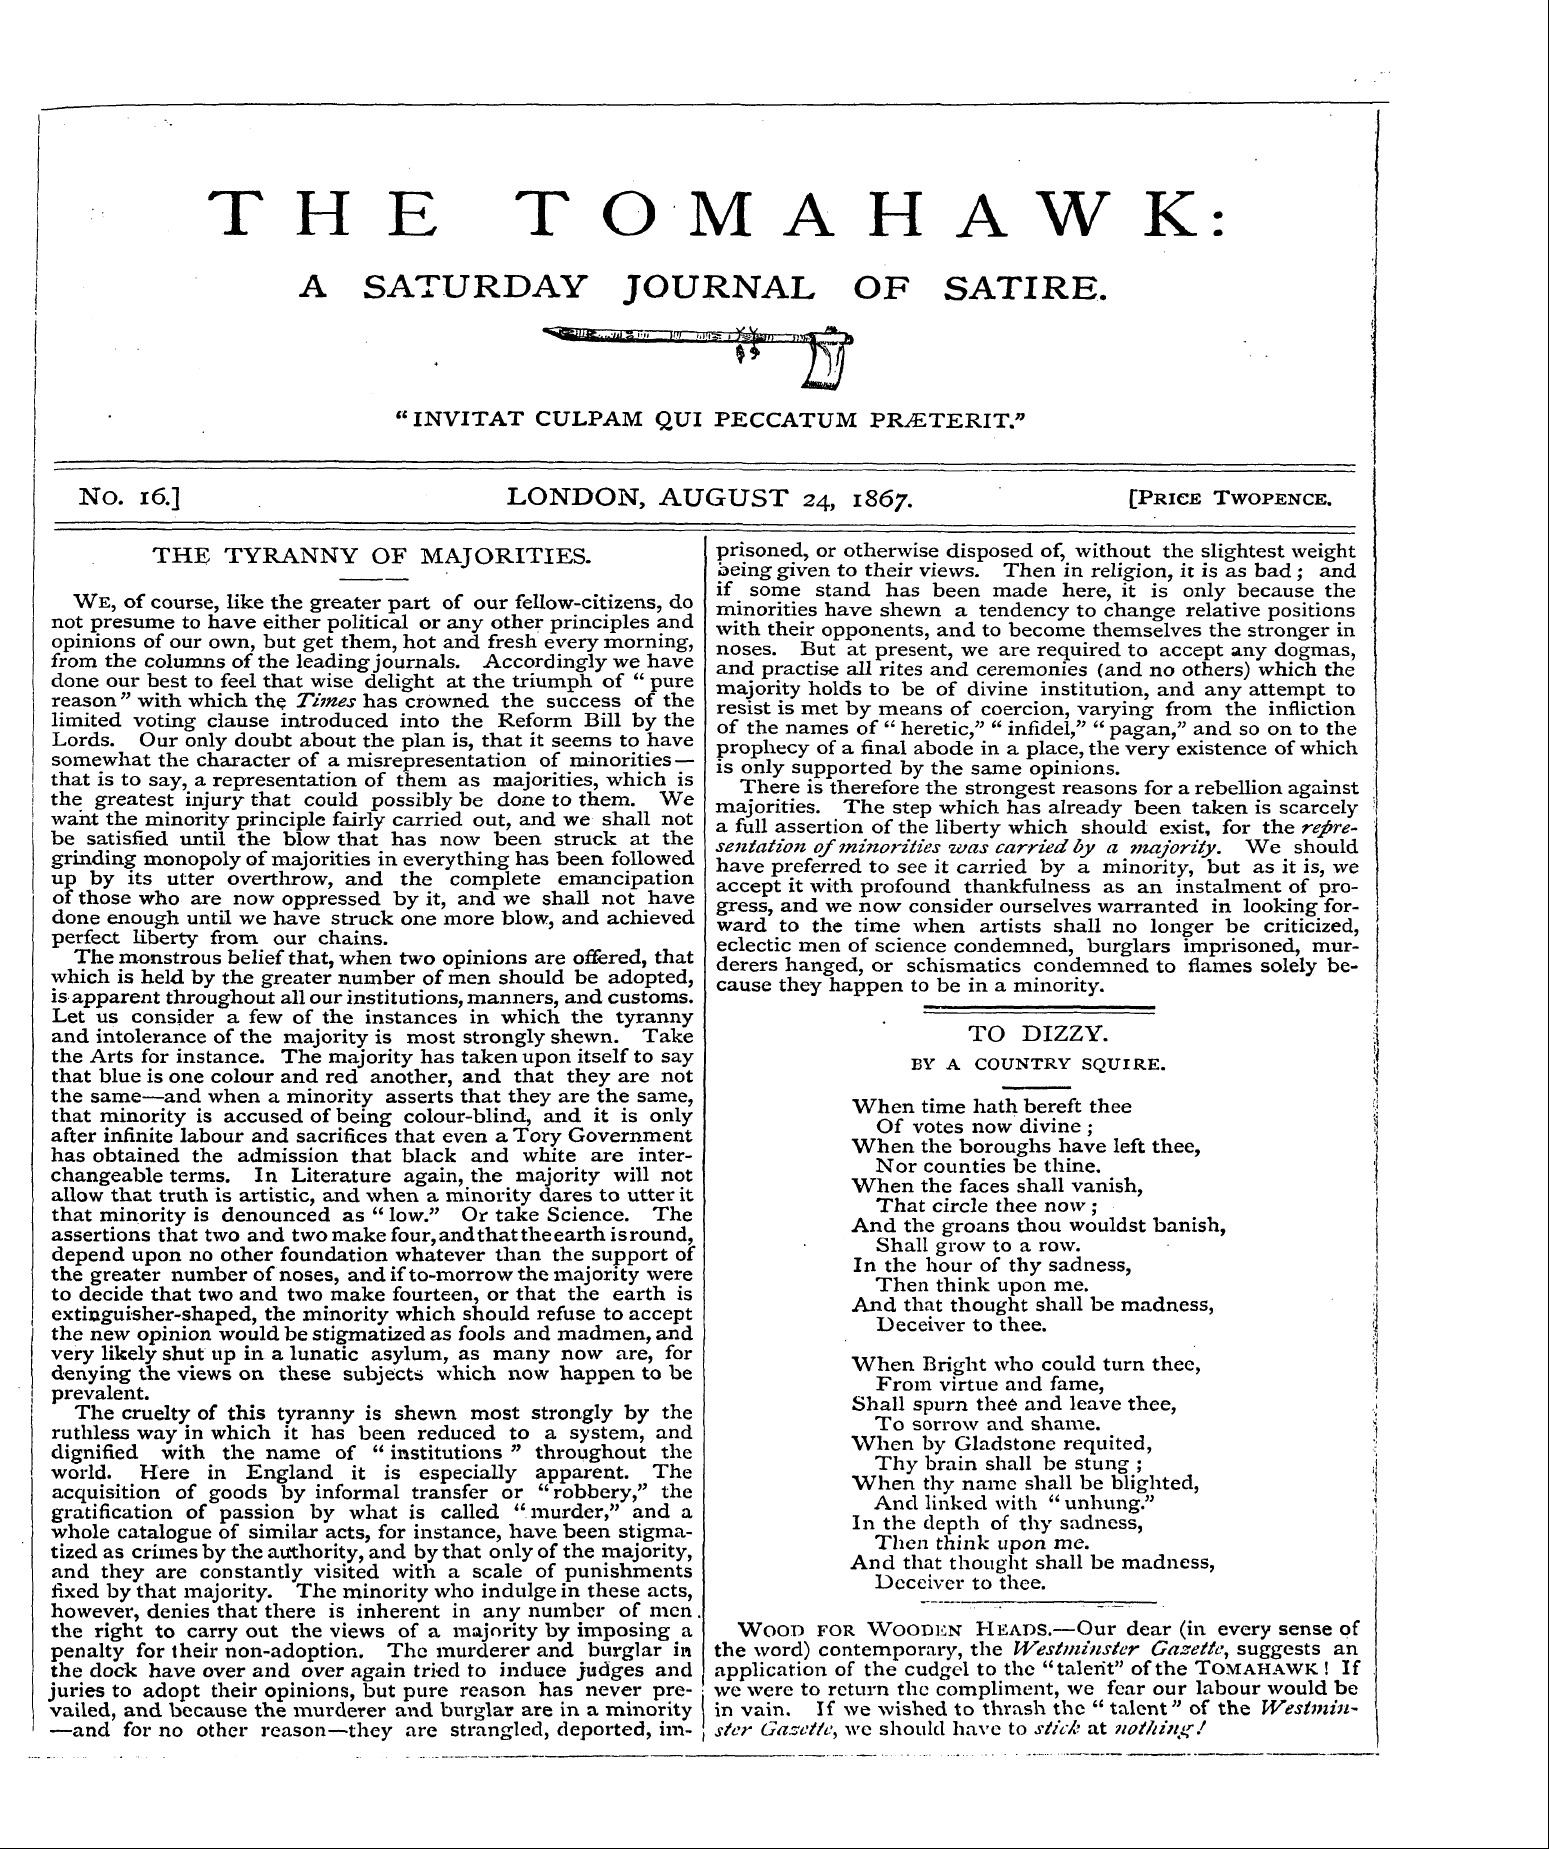 Tomahawk (1867-1870): jS F Y, 1st edition - The Tyranny Of Majorities.